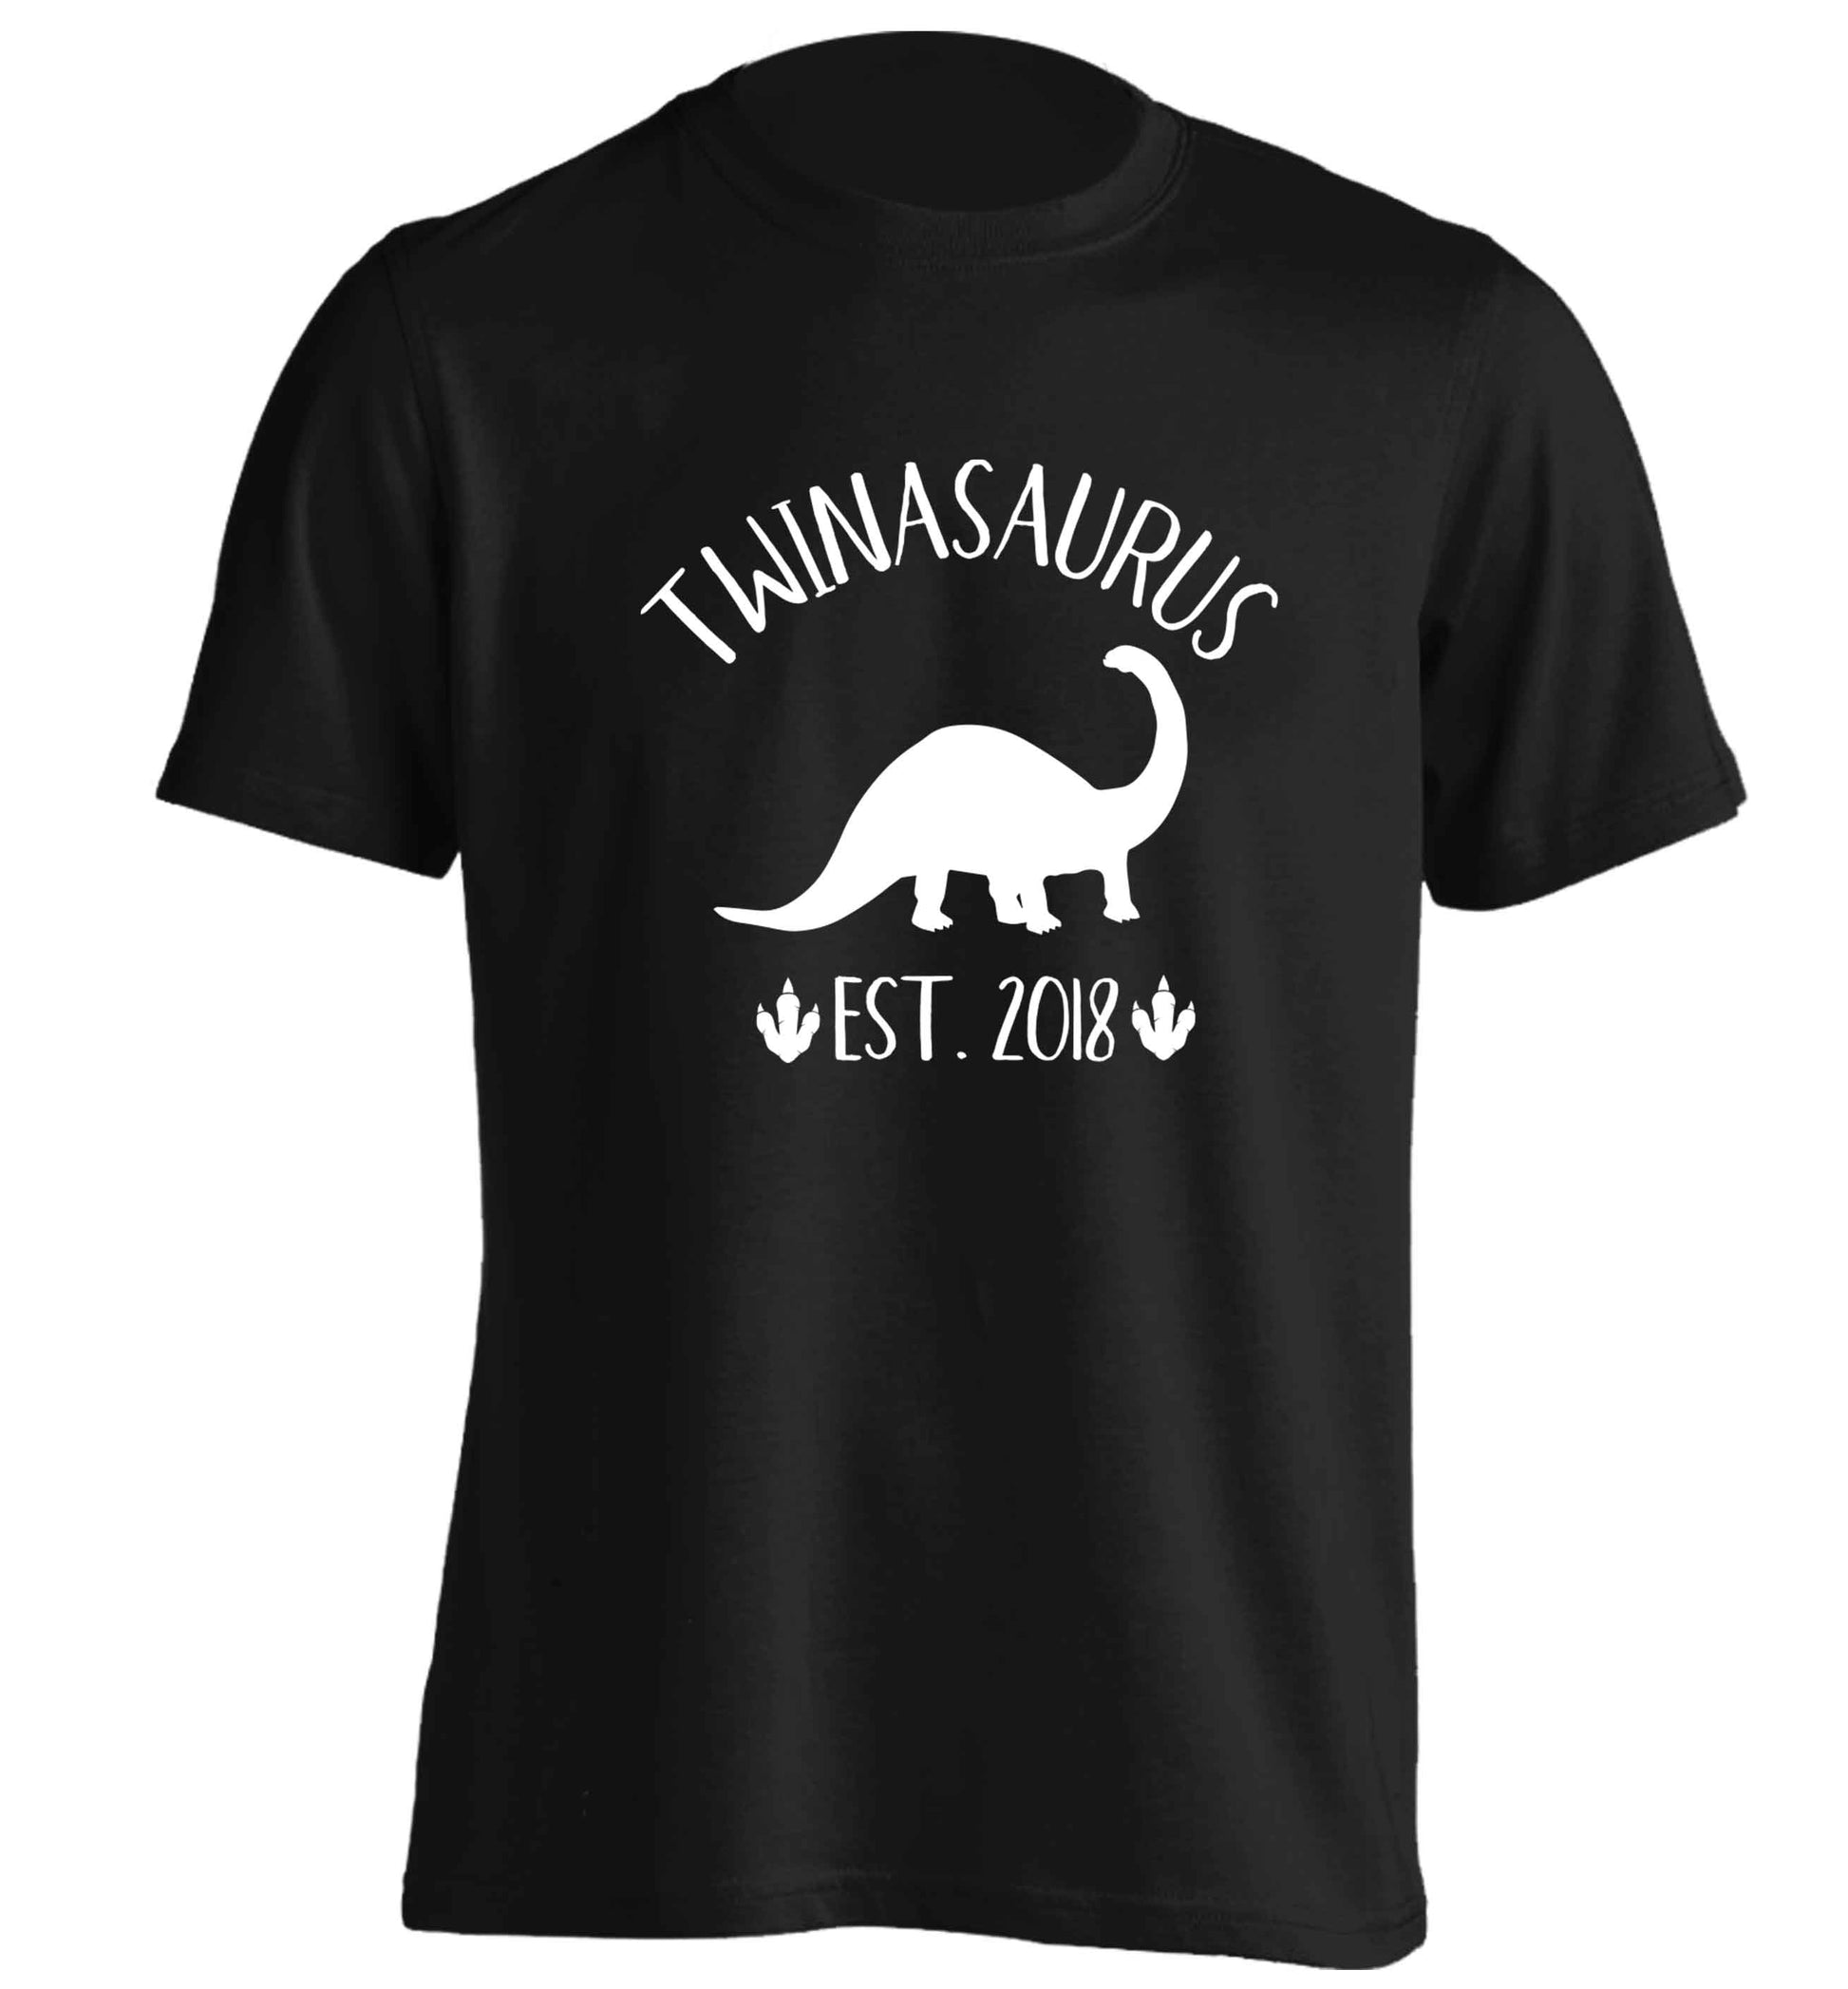 Personalised twinasaurus since (custom date) adults unisex black Tshirt 2XL